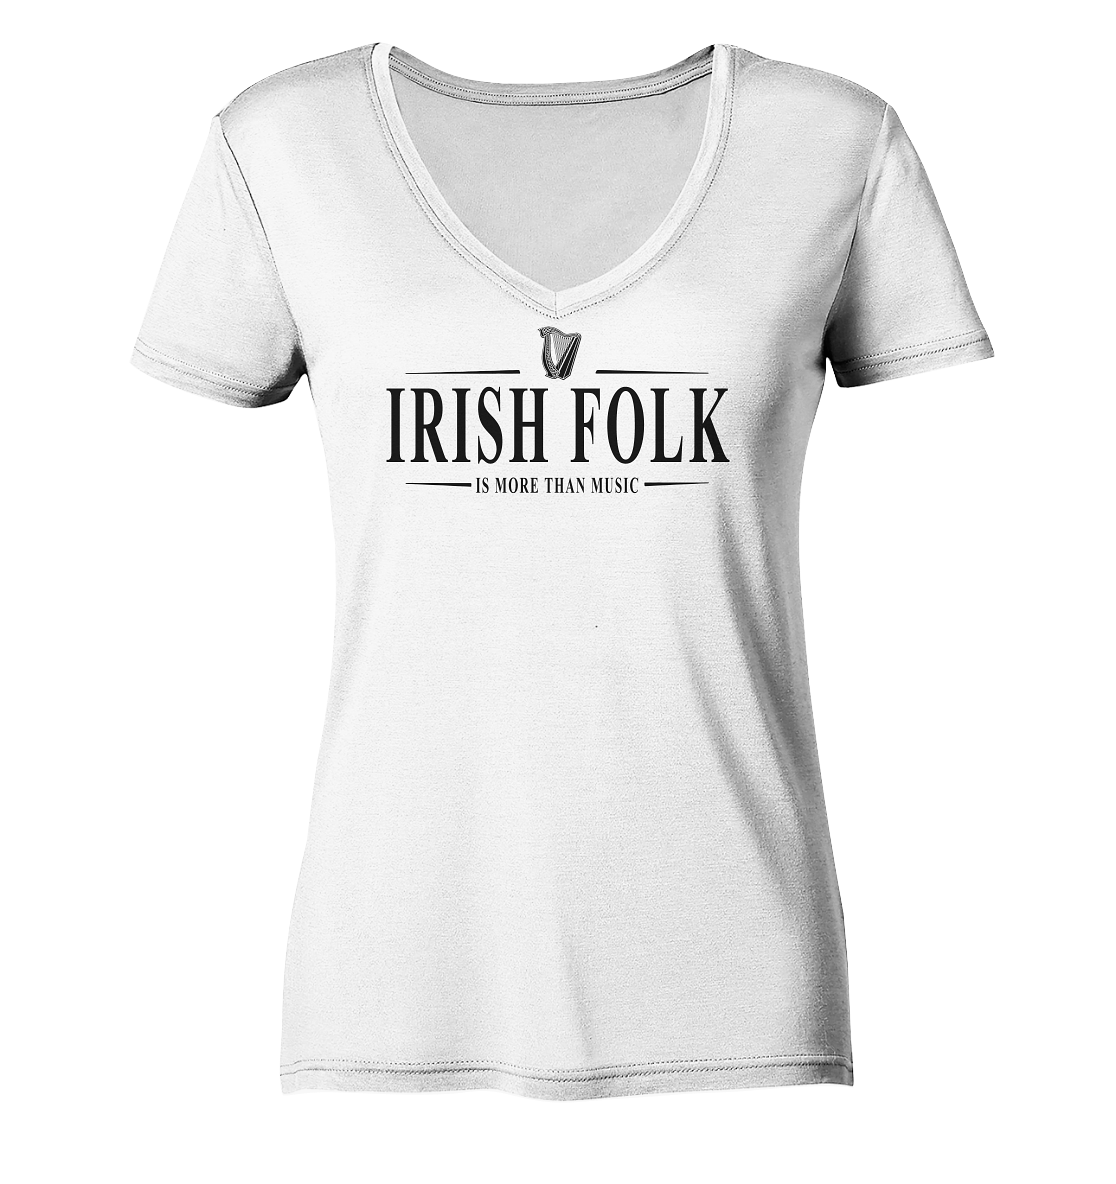 Irish Folk "Is More Than Music" - Ladies V-Neck Shirt